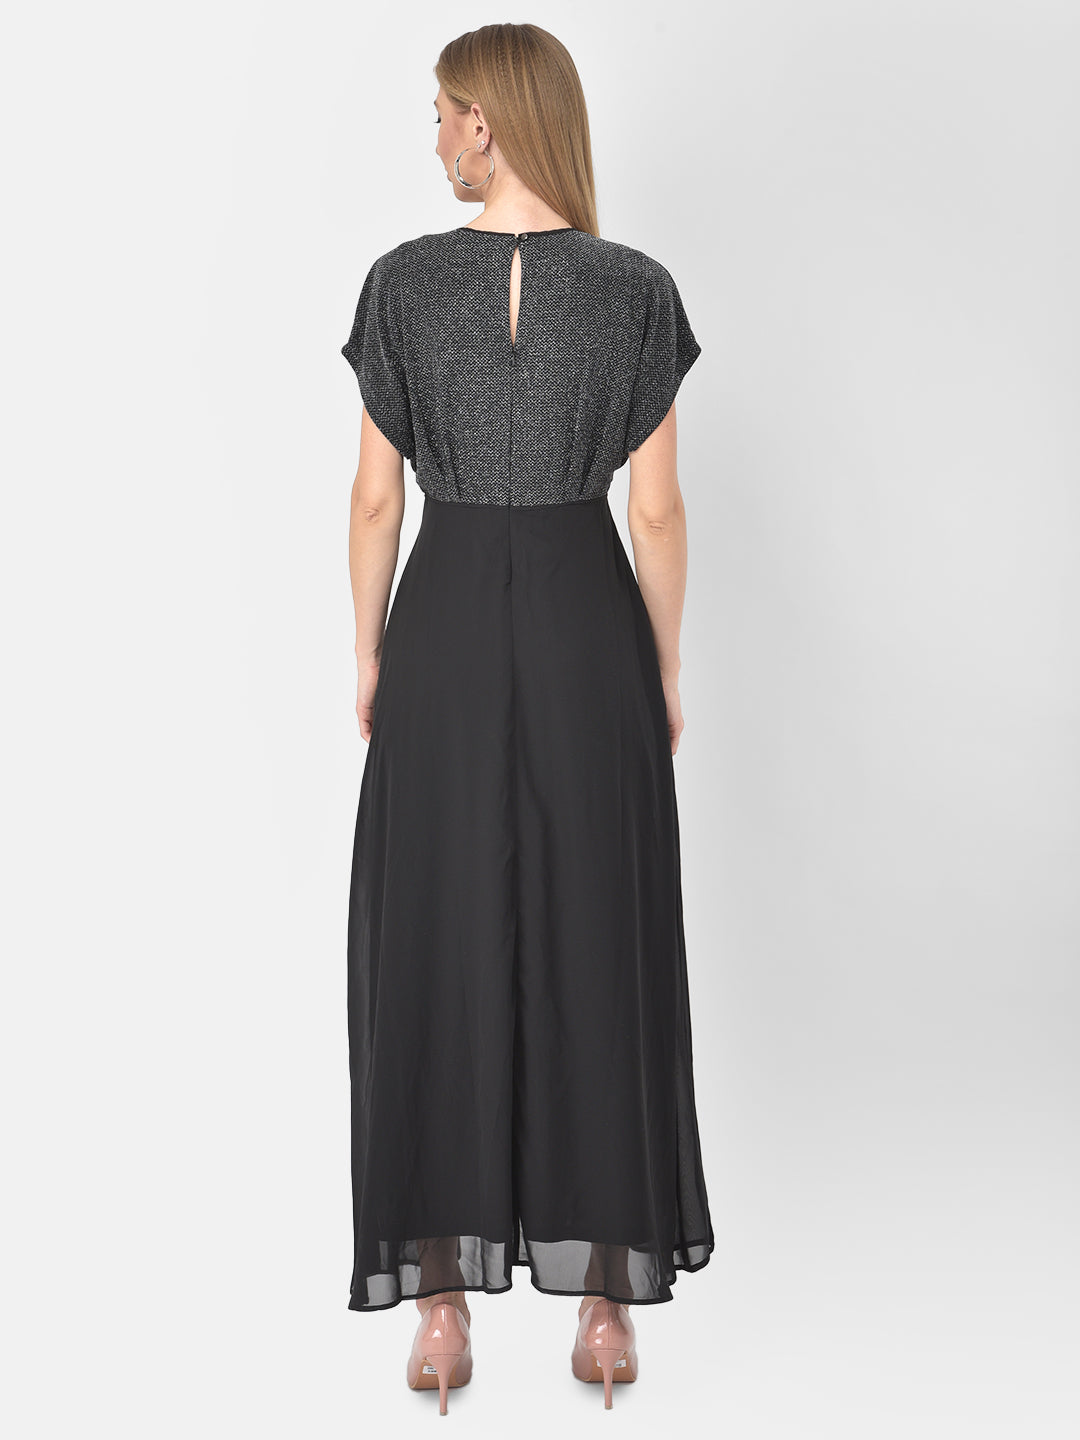 Black Half Sleeve Solid Maxi Dress